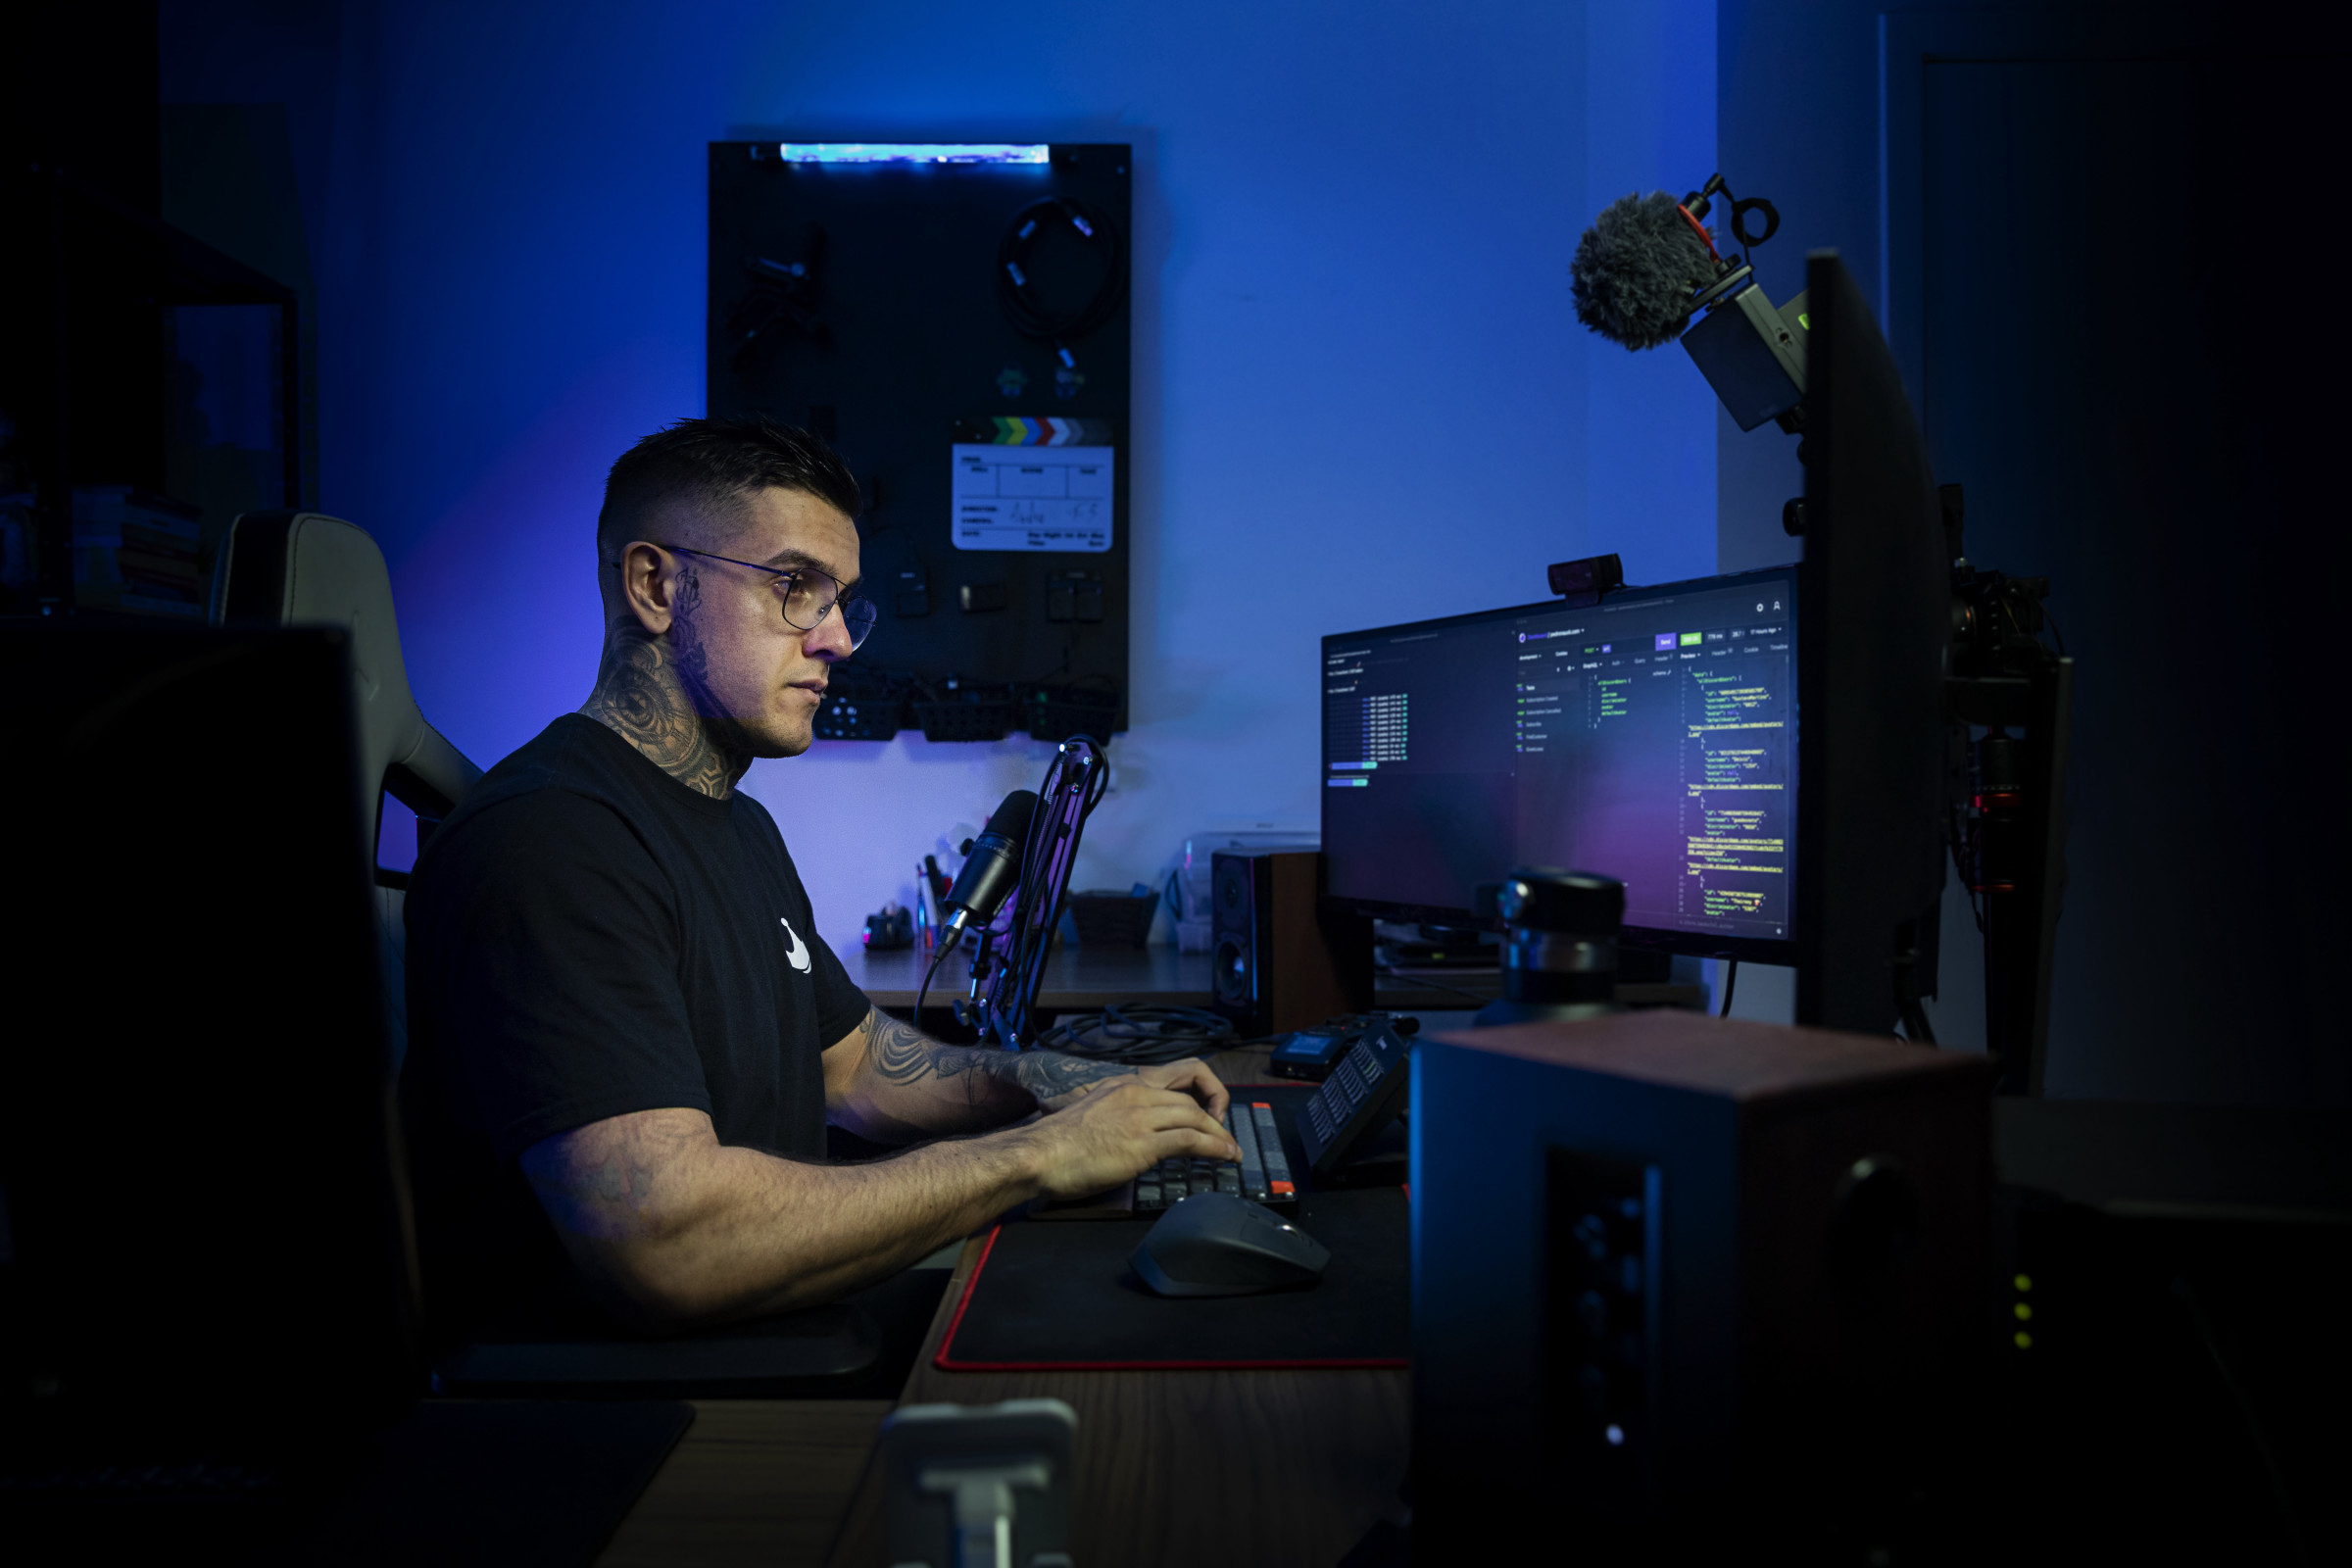 Author Pedro in a dark, blue-lit room, working on his desktop